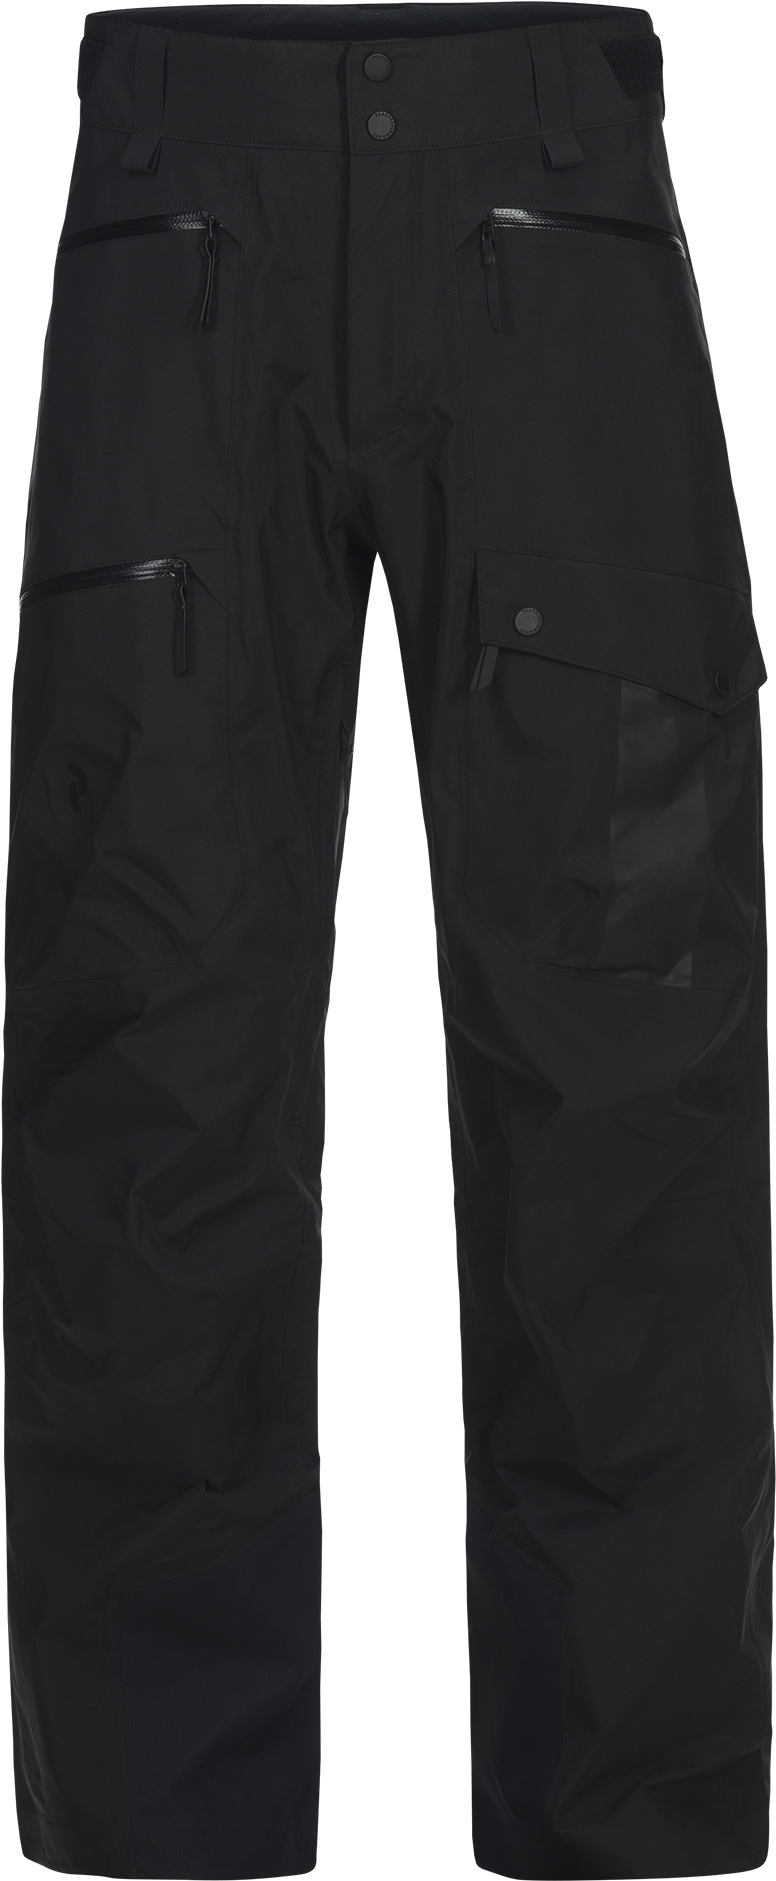 Black Tactical Cargo Pants PNG image